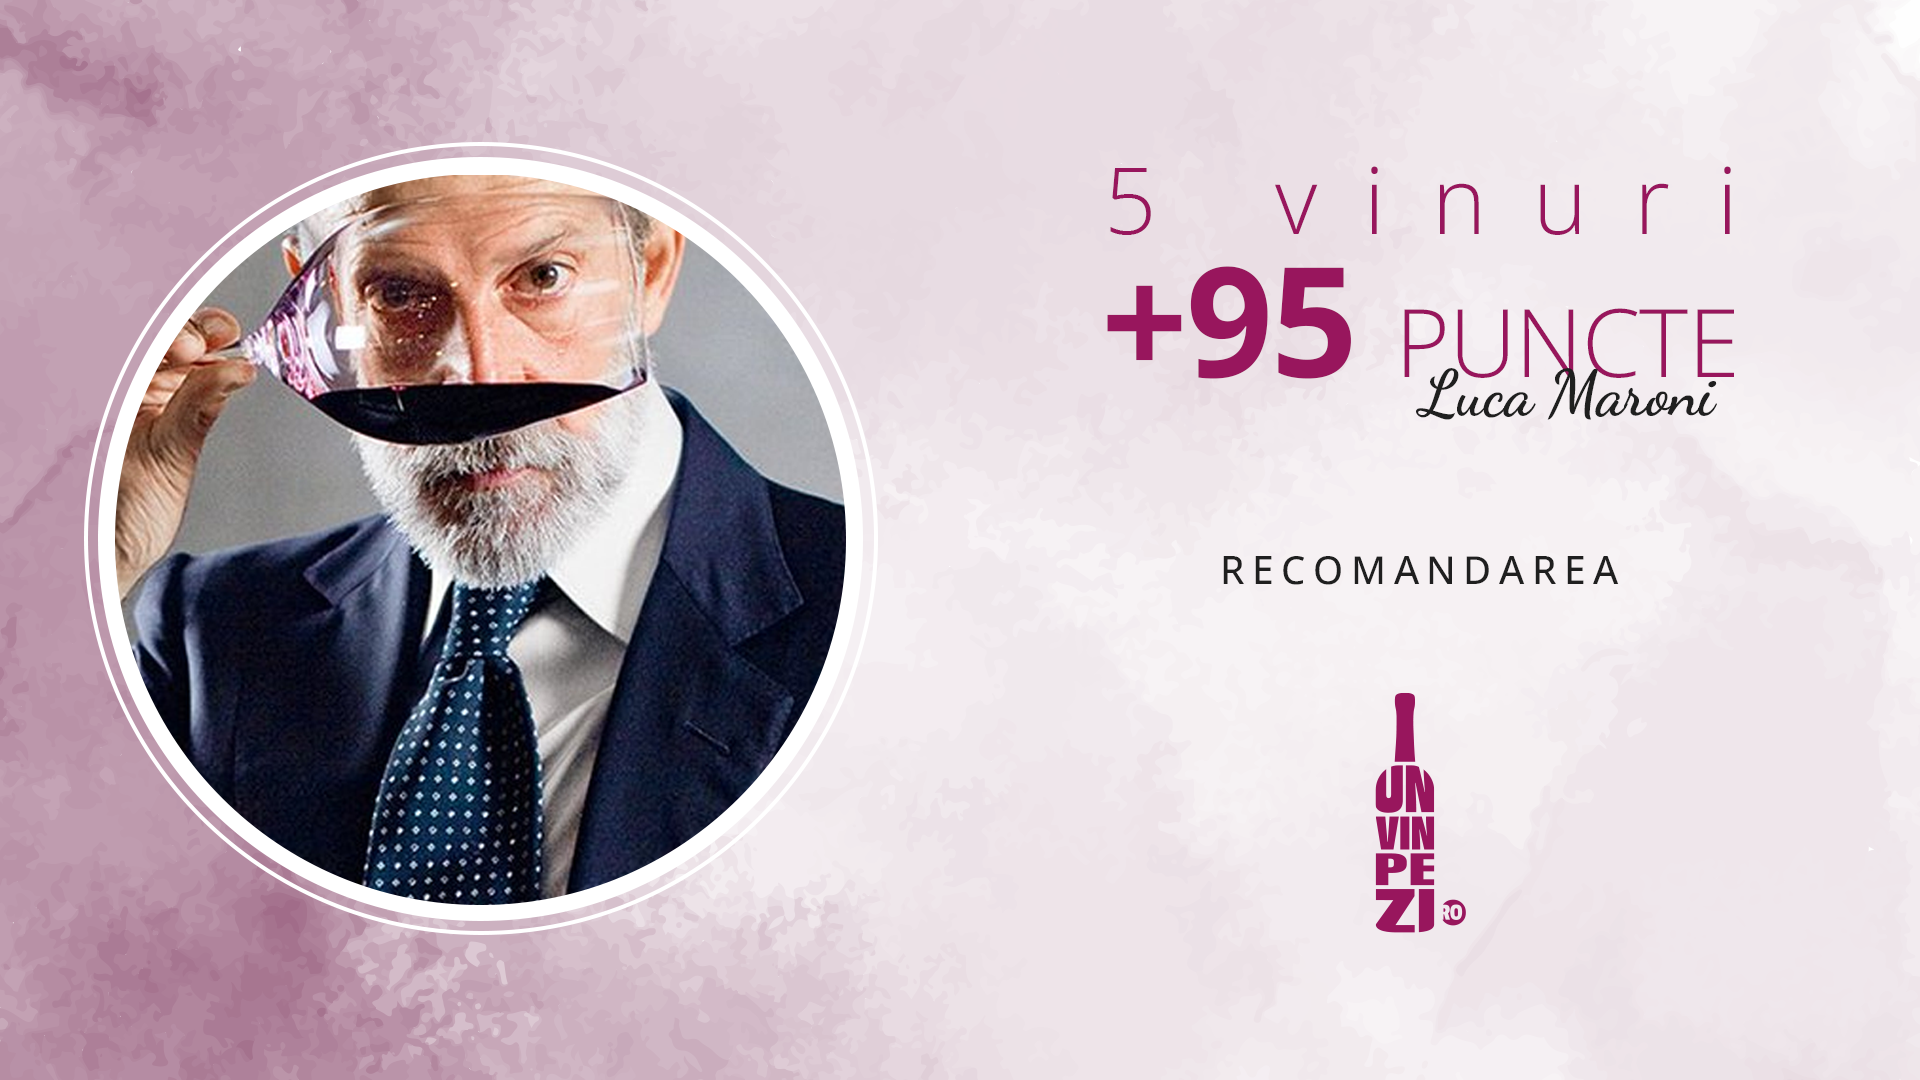 5 vinuri +95 puncte Luca Maroni, recomandate de Unvinpezi.ro